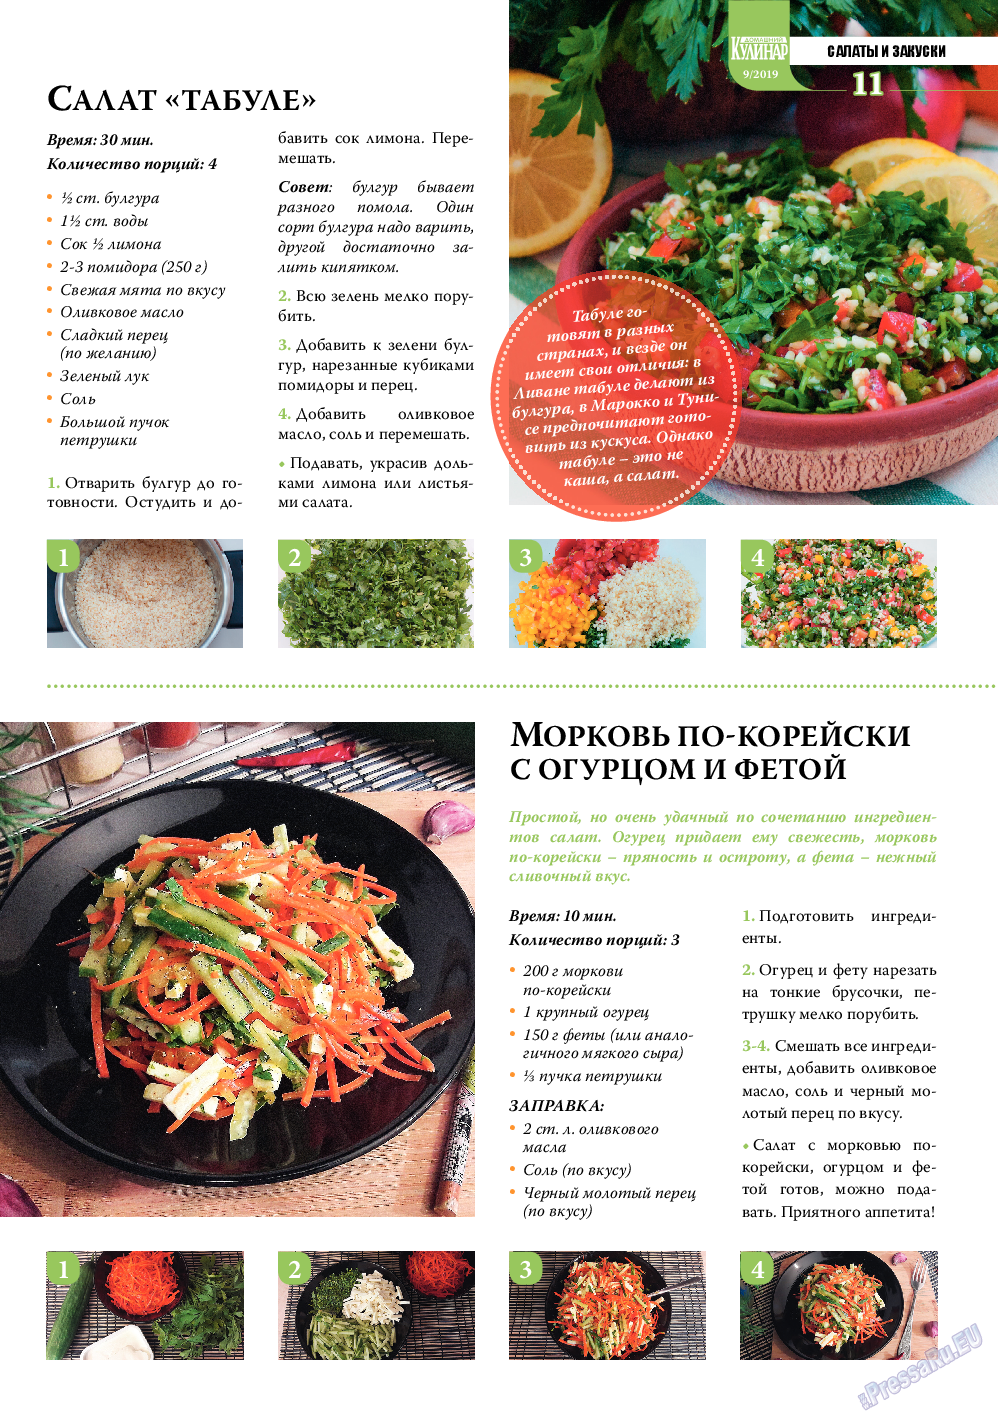 Домашний кулинар (журнал). 2019 год, номер 9, стр. 11